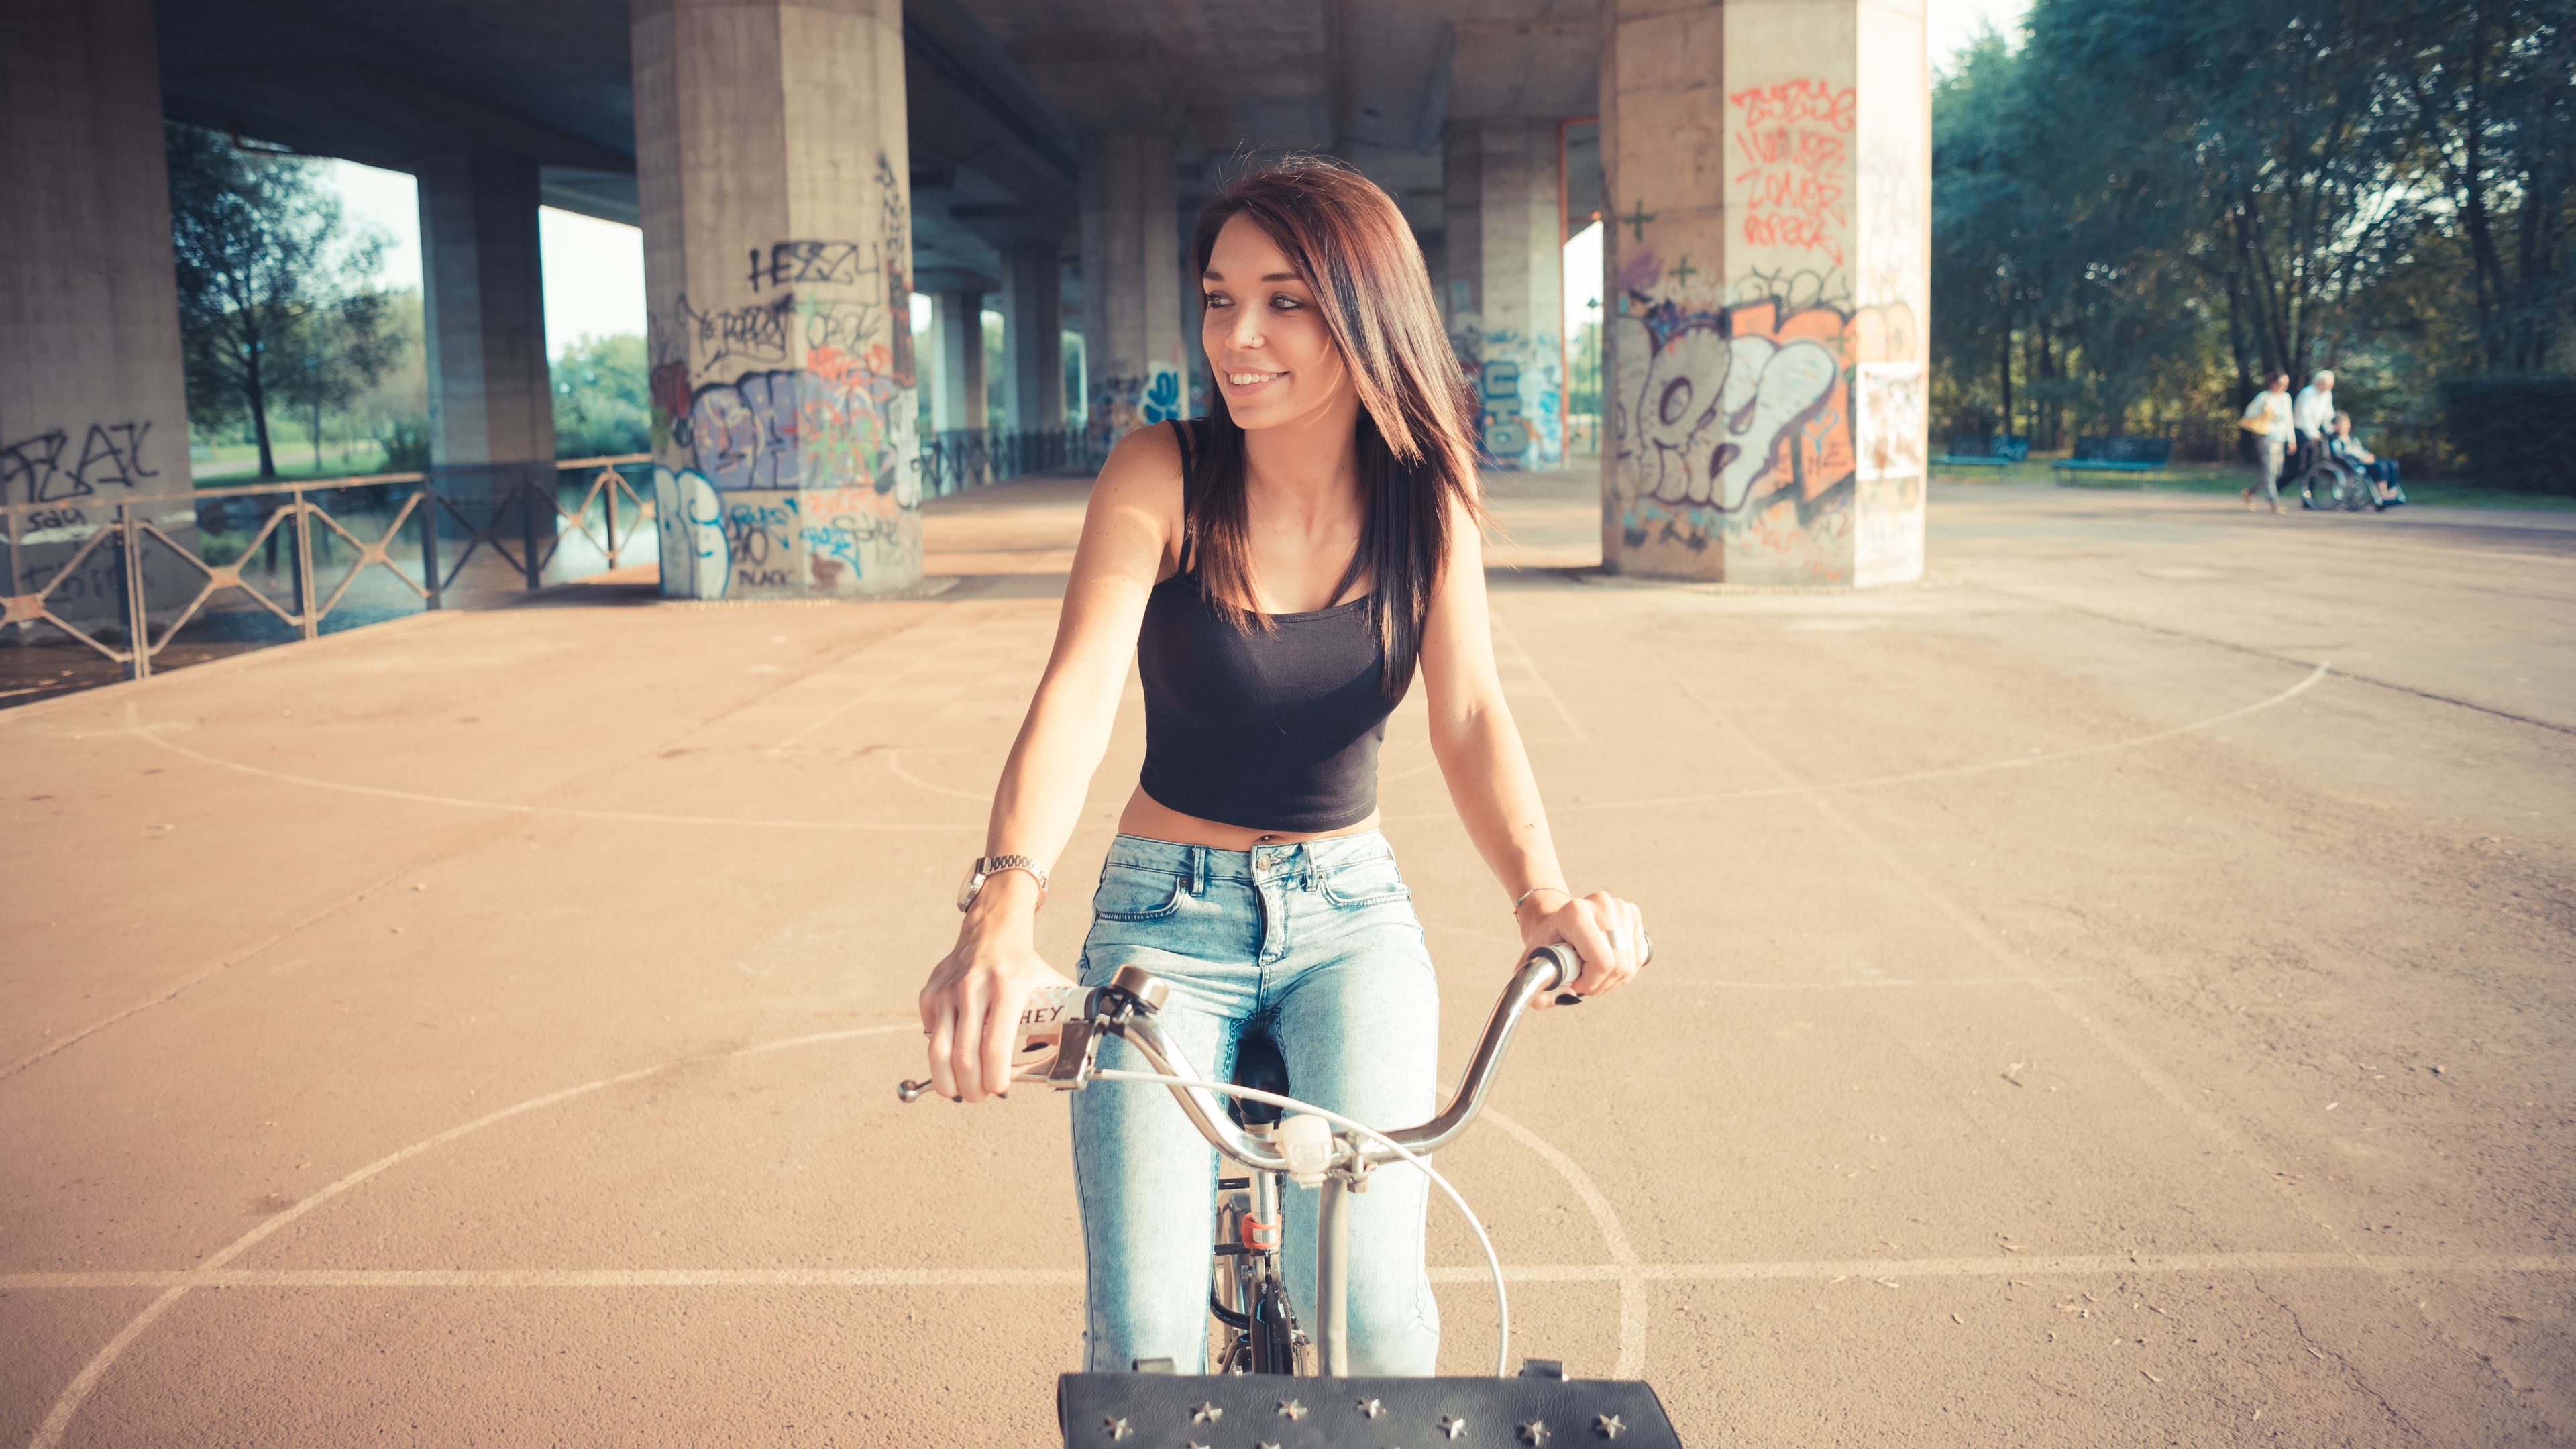 Women Bicycle Jeans Bare Midriff Brunette Long Hair Graffiti Smiling 4K Women Outdoors Urban Vehicle 3840x2160